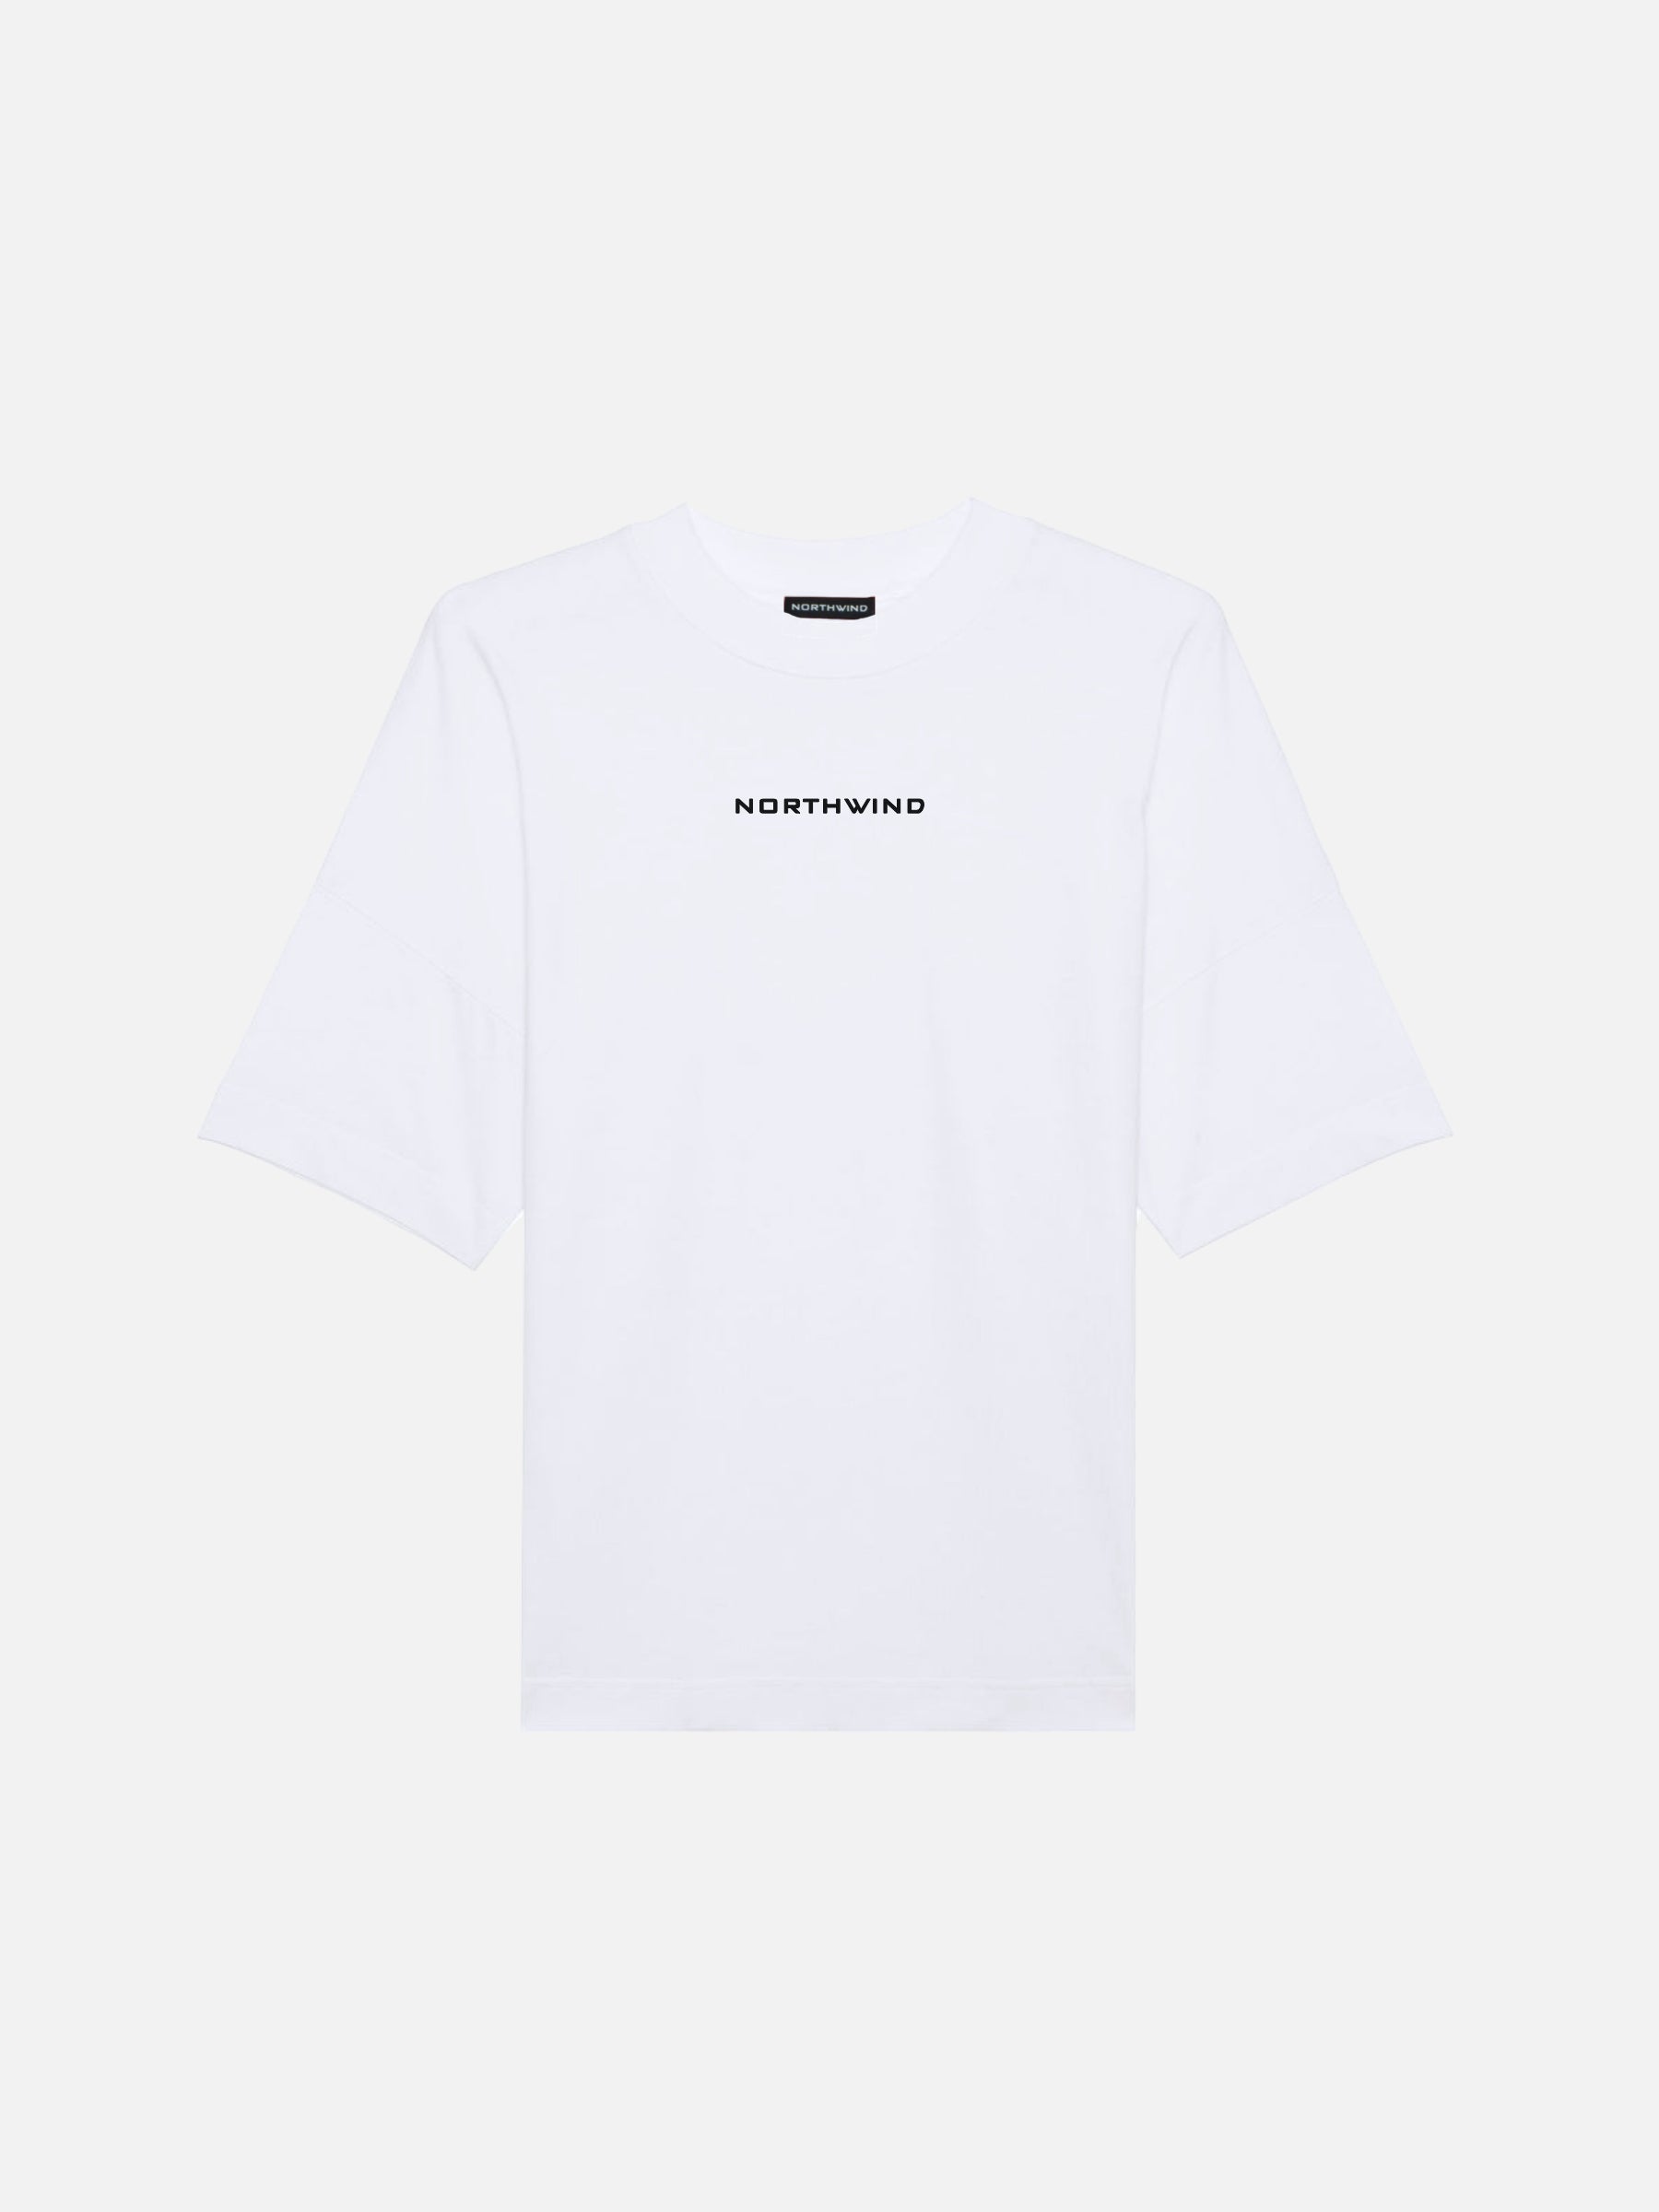 The Waves Organic T-Shirt - White